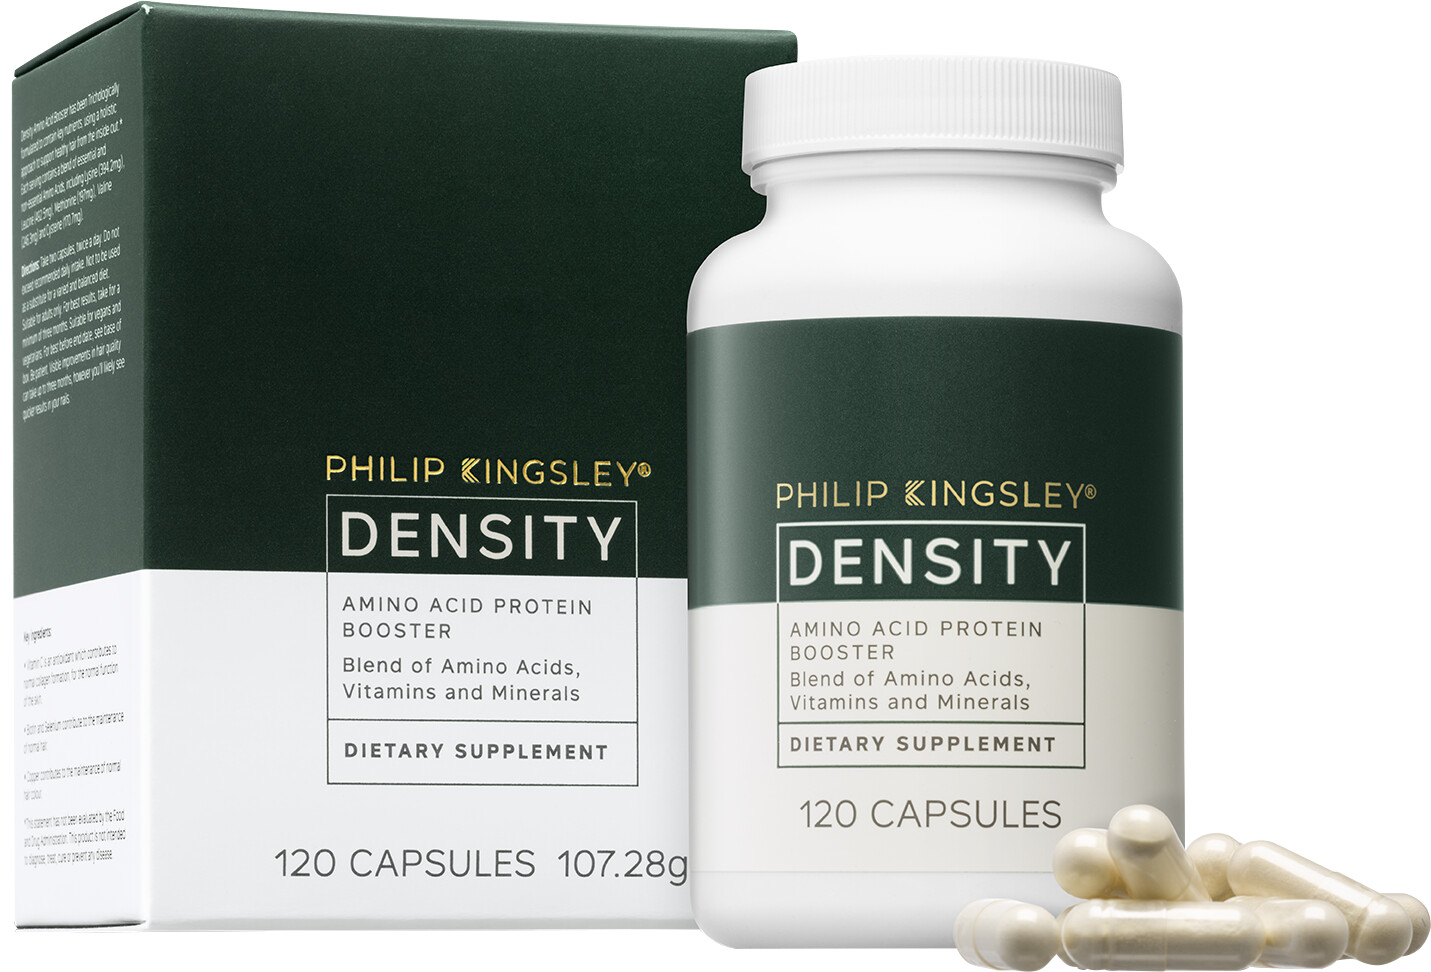 Philip Kingsley Density Amino Acid Protein Booster 120 Capsules